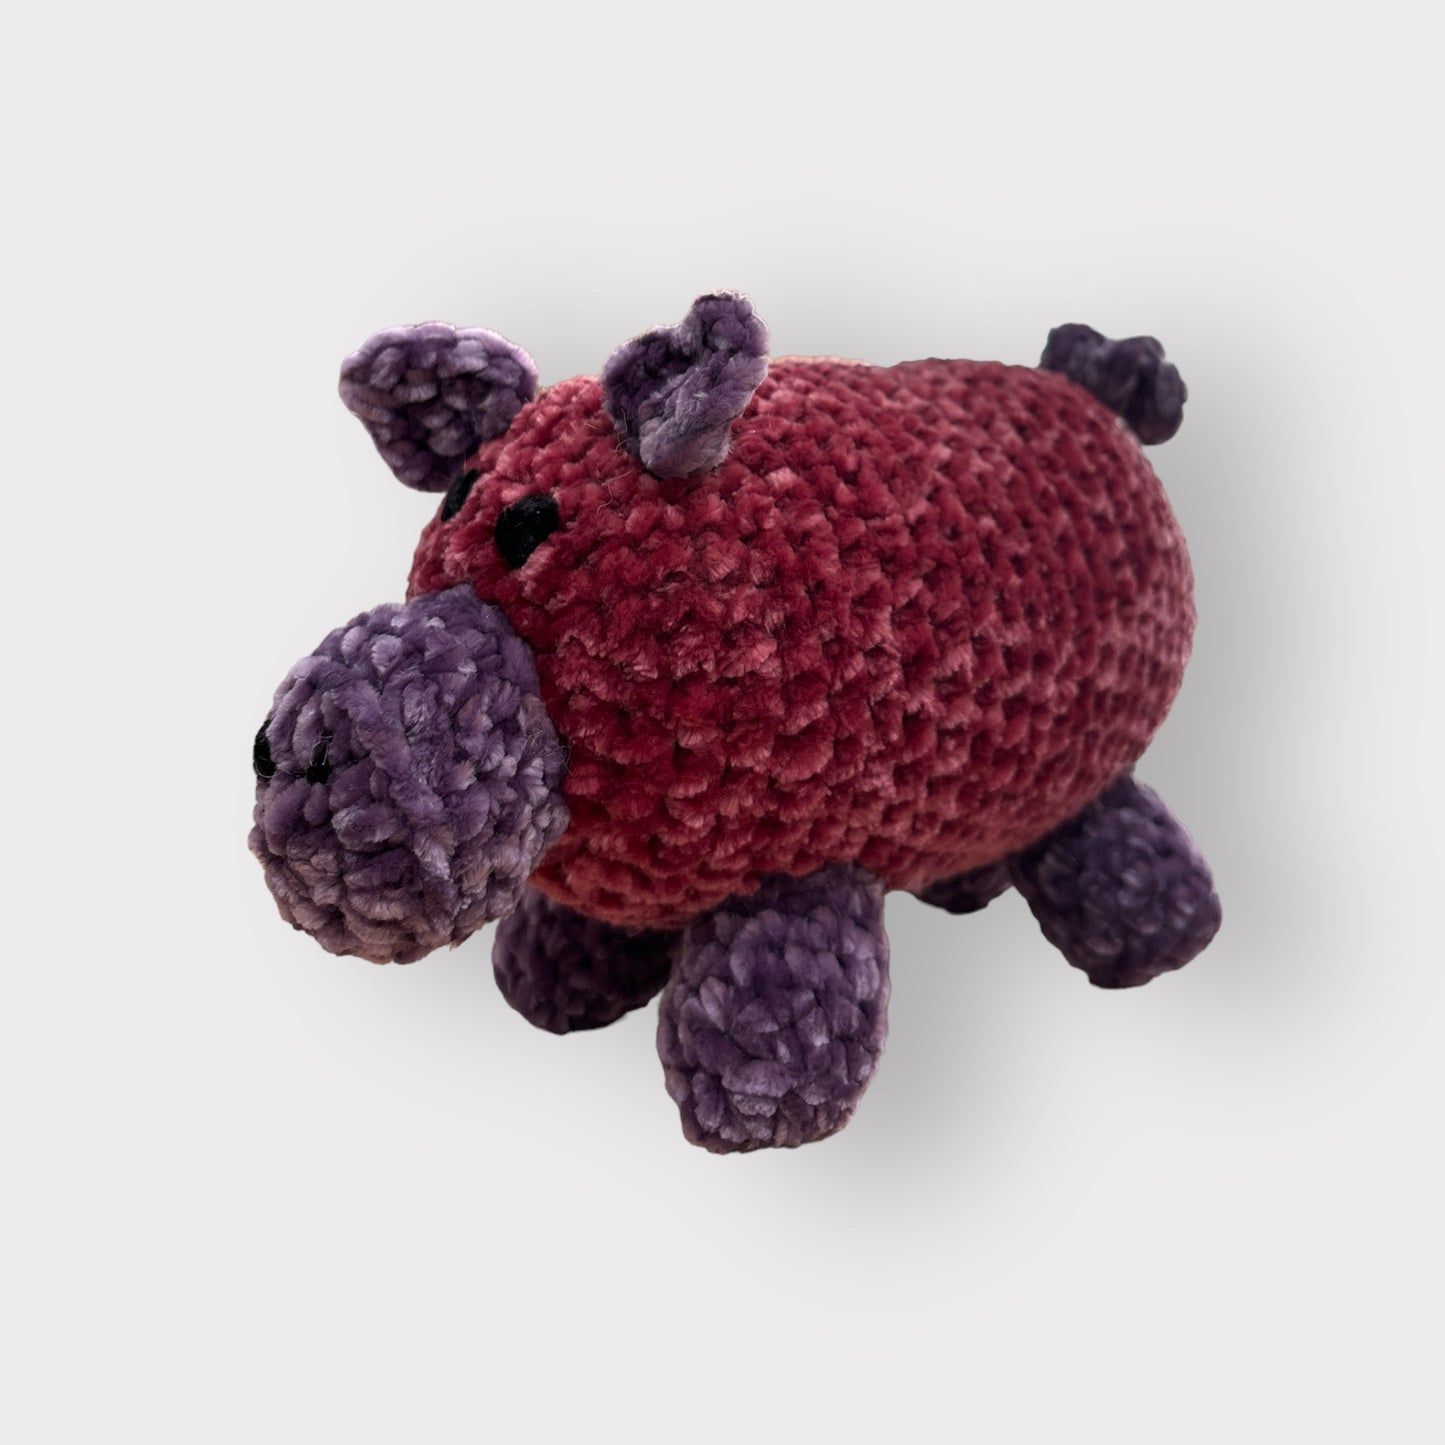 CkCrochet | Handmade Crochet Animals